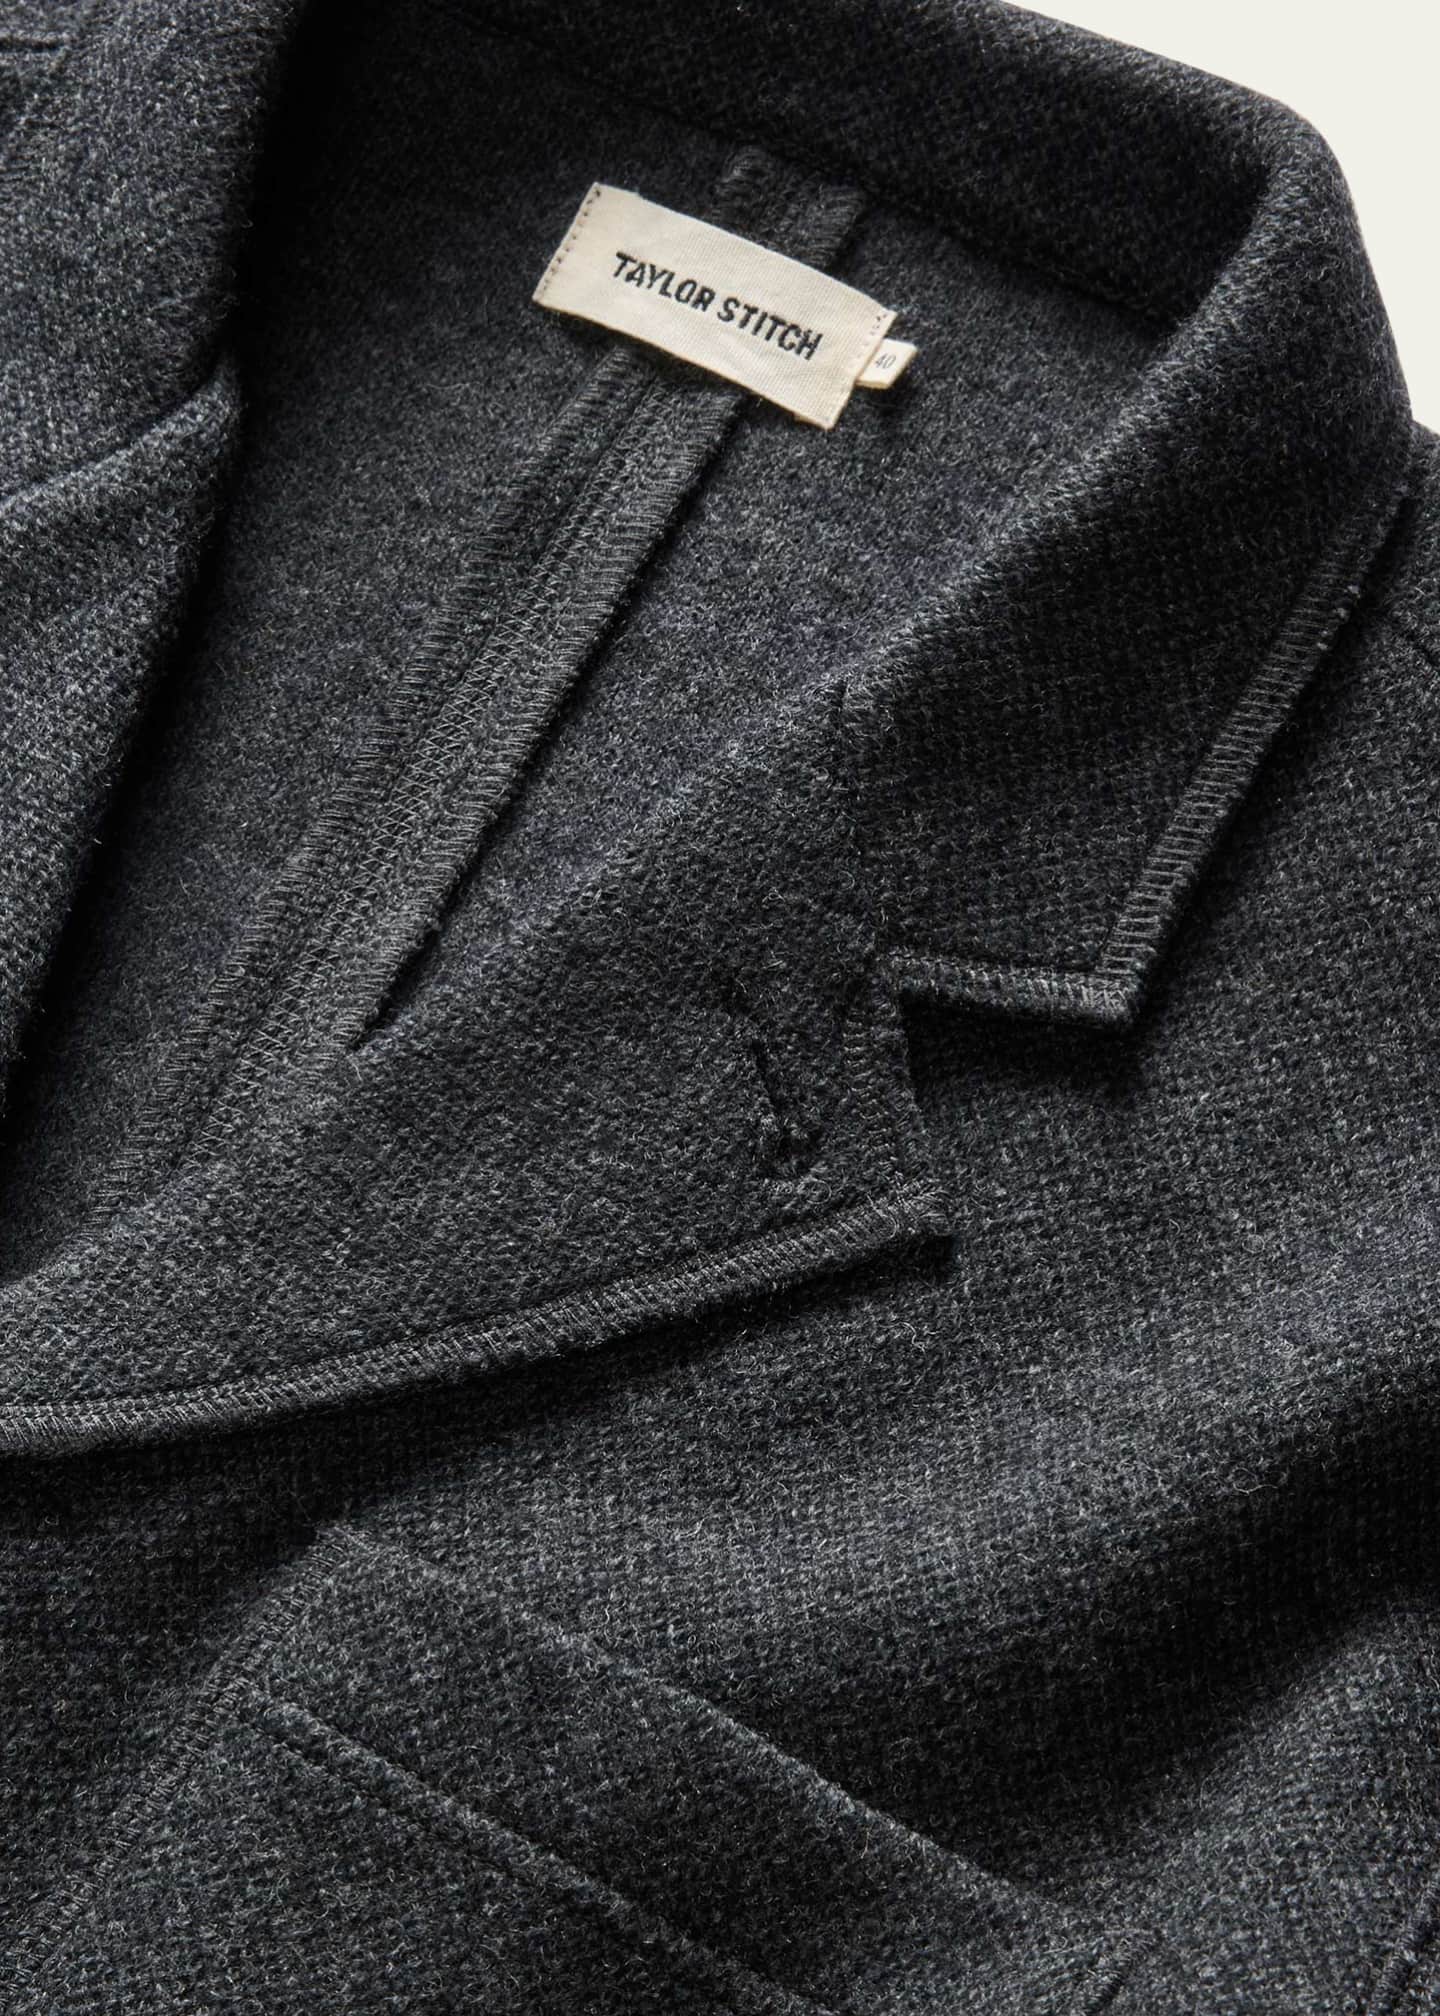 TAYLOR STITCH Men's Ridgewood Birdseye Knit Sport Coat - Bergdorf Goodman